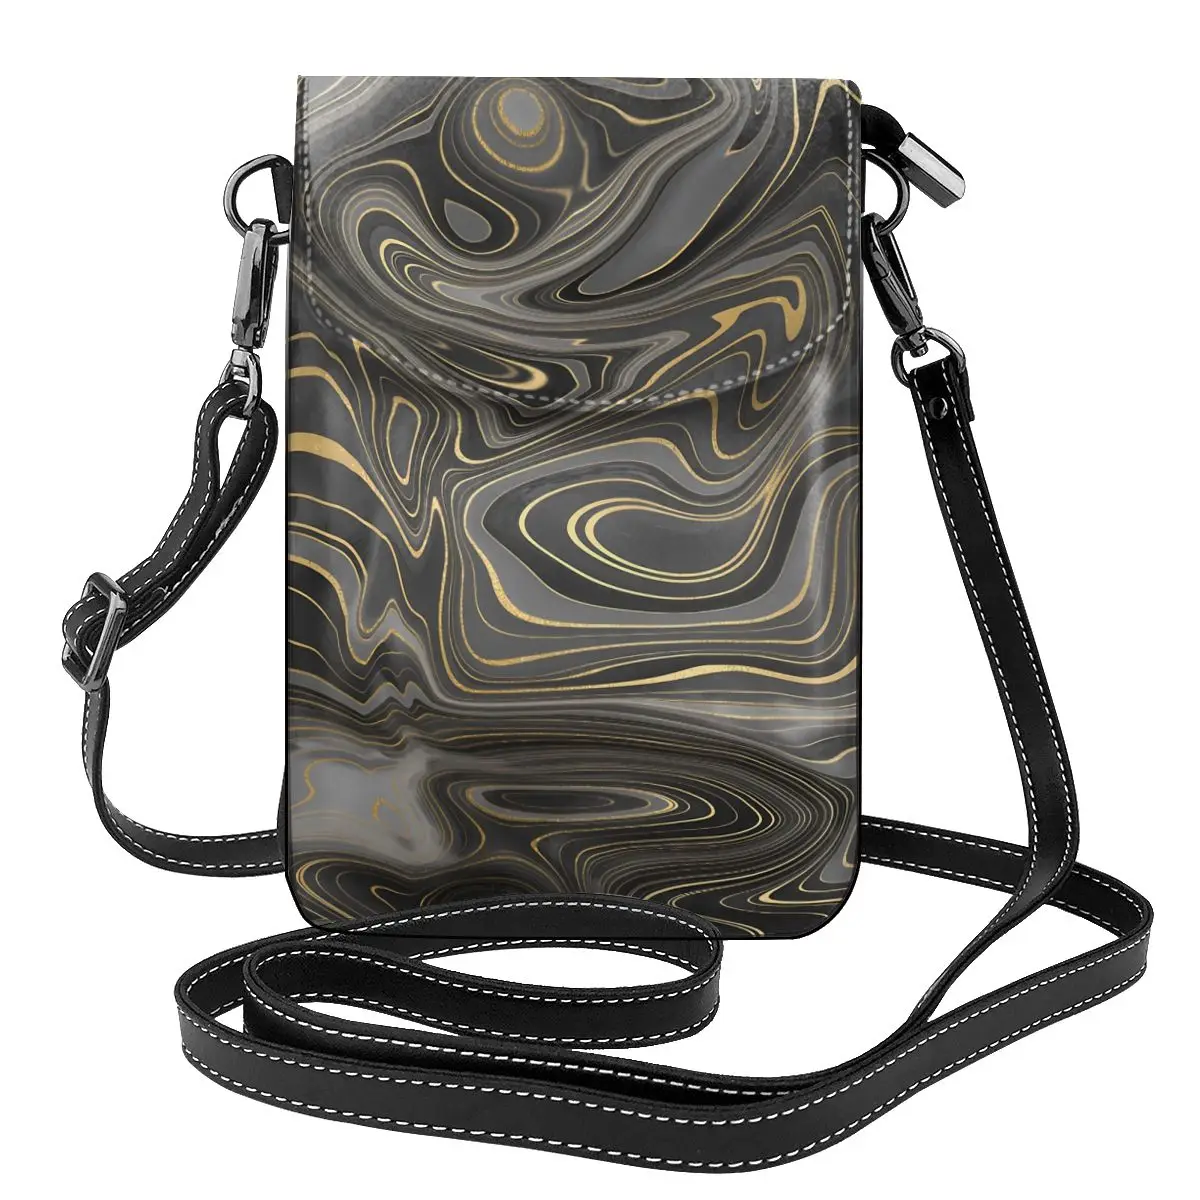 Women's Swirl Print Leather Tote Bag